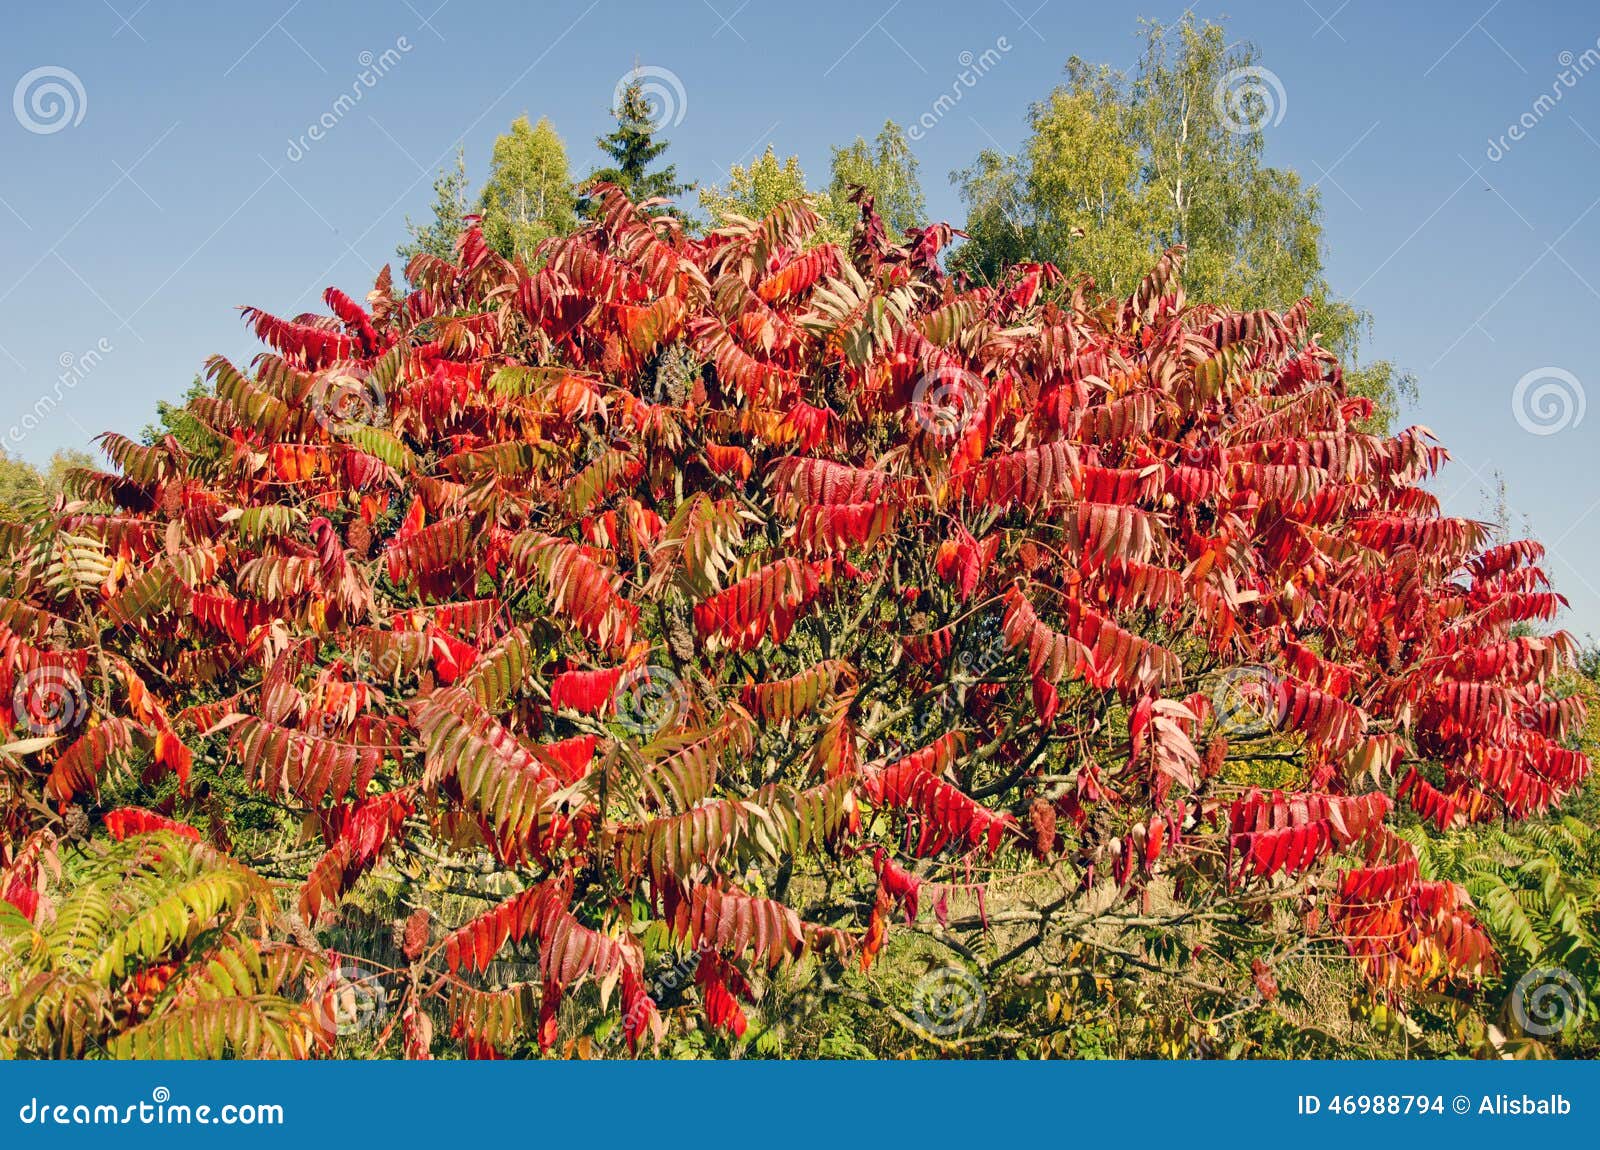 beautiful autumn stahhorn sumac (rhus typhina) leaves